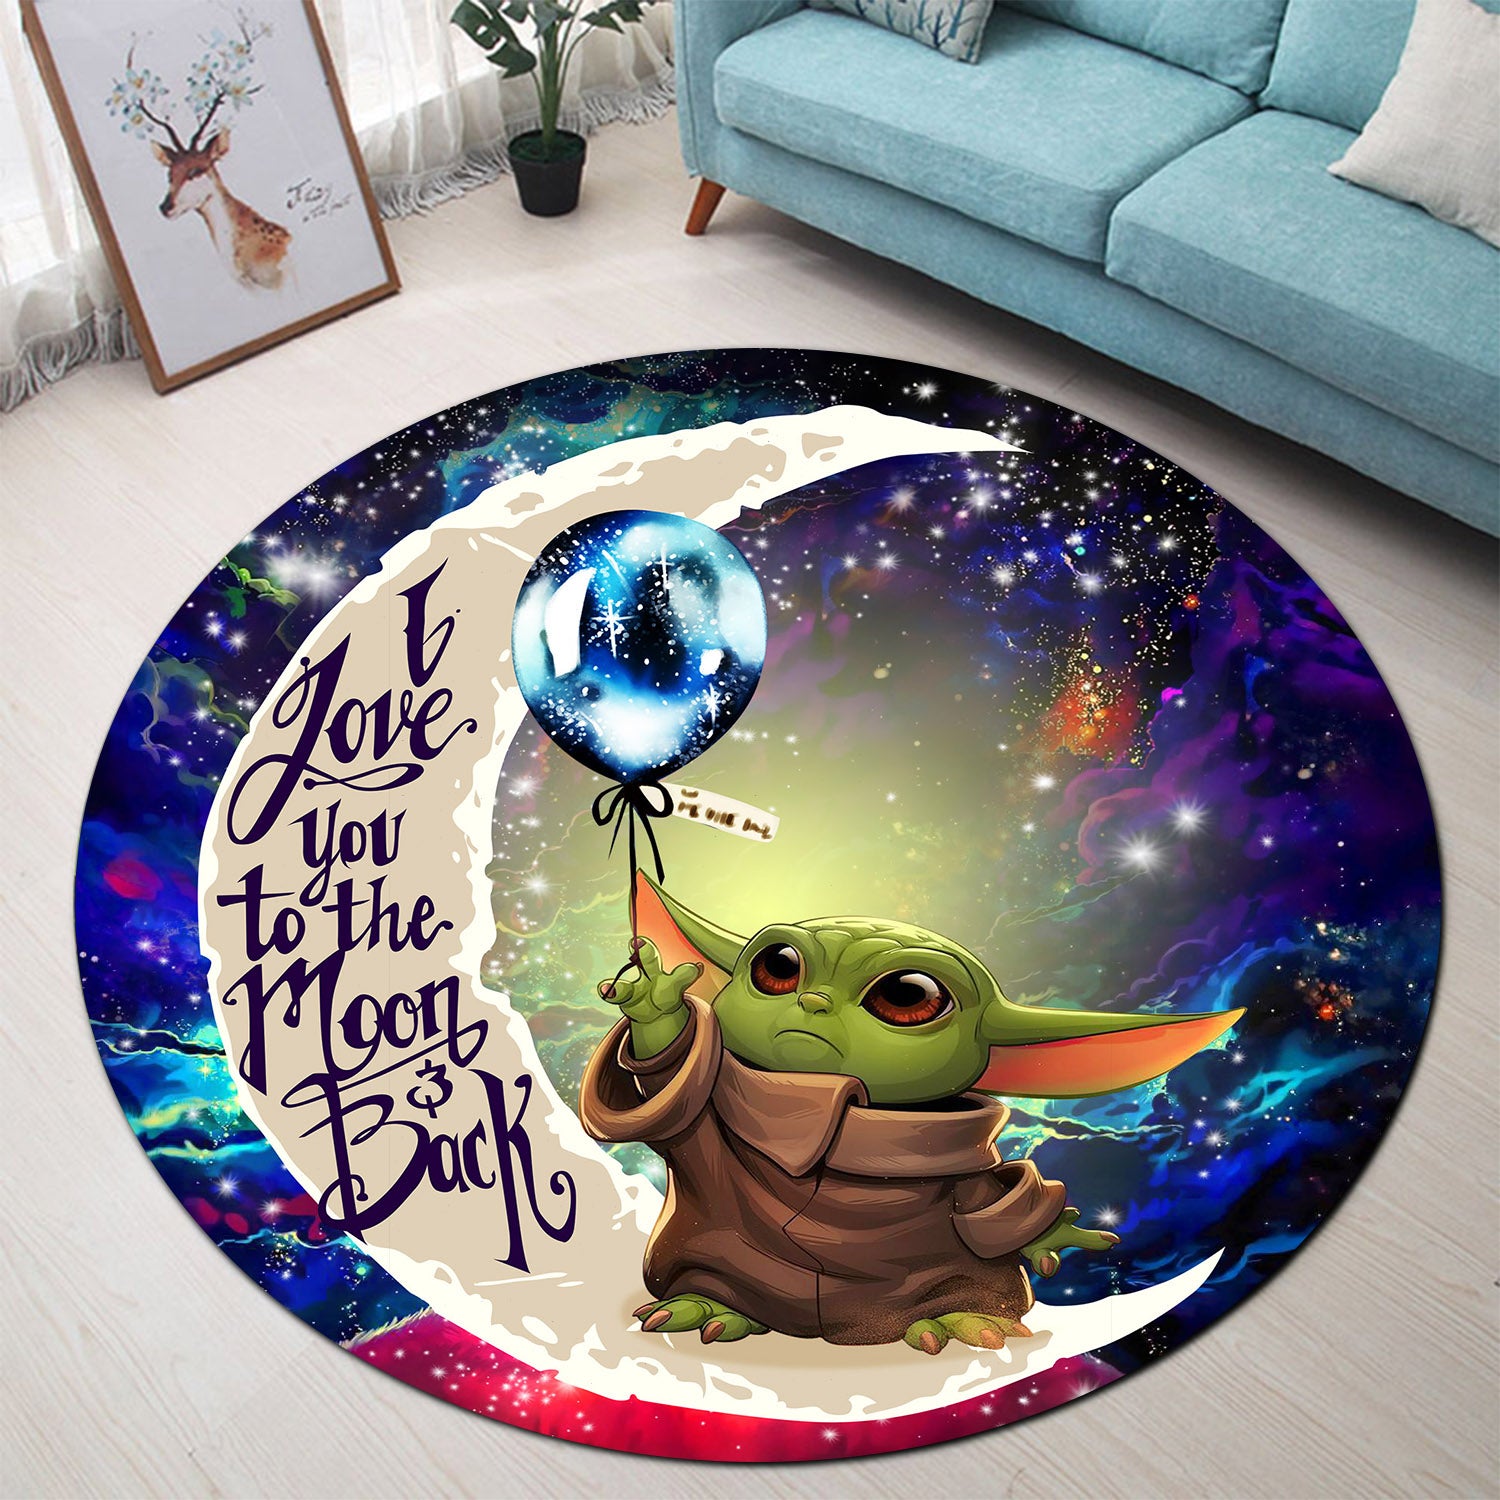 Baby Yoda Love You To The Moon Galaxy Round Carpet Rug Bedroom Livingroom Home Decor Nearkii